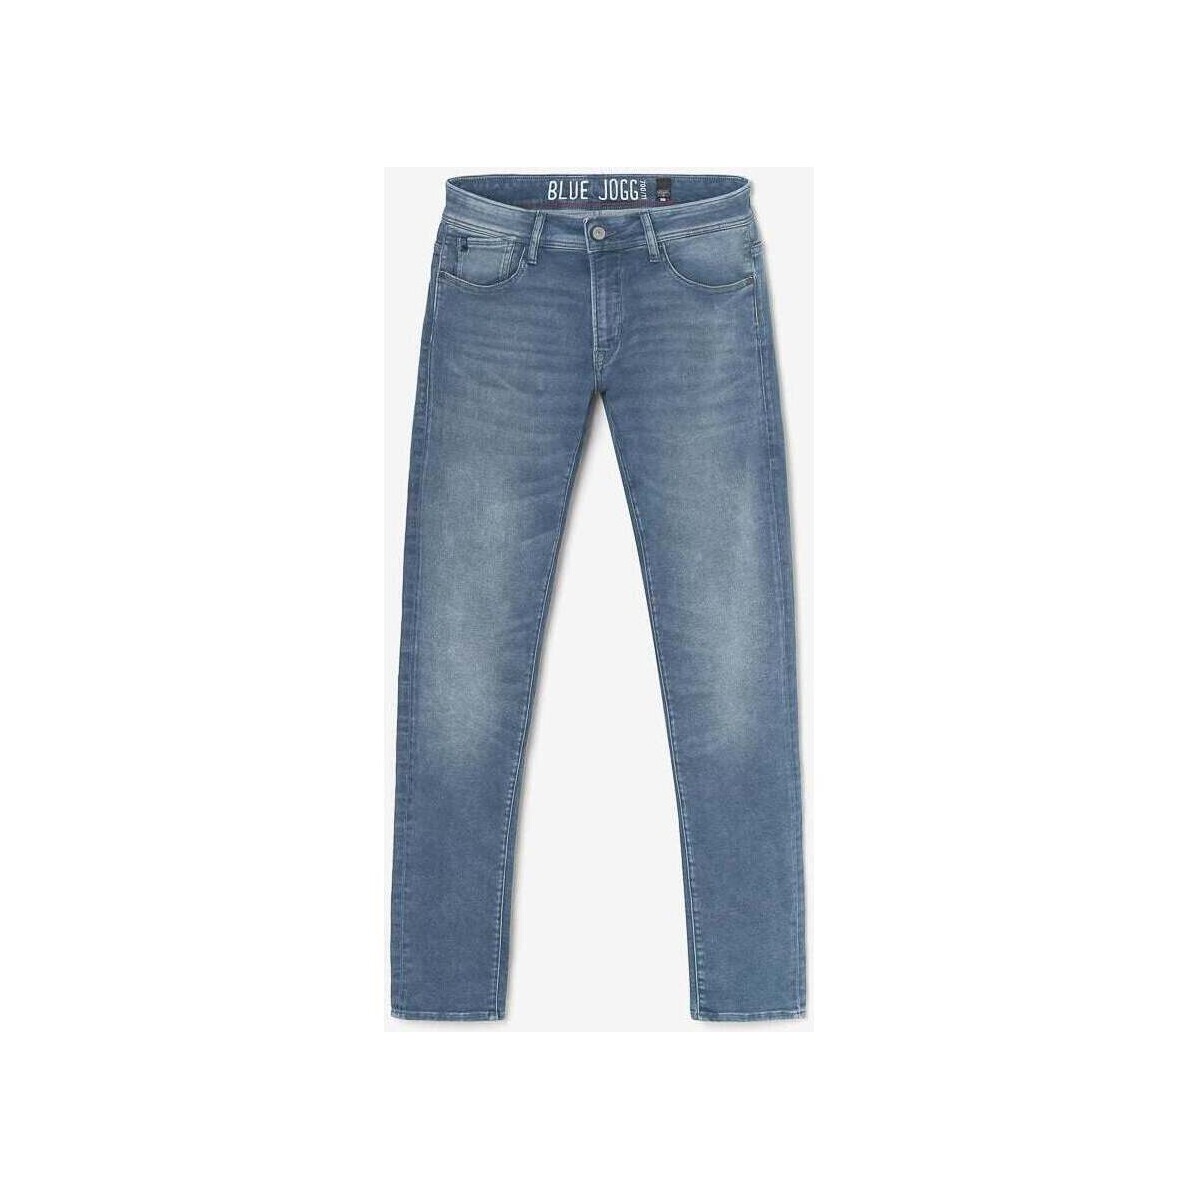 Le Temps des Cerises Bleu Jogg 700/11 adjusted jeans bleu UbBbguux